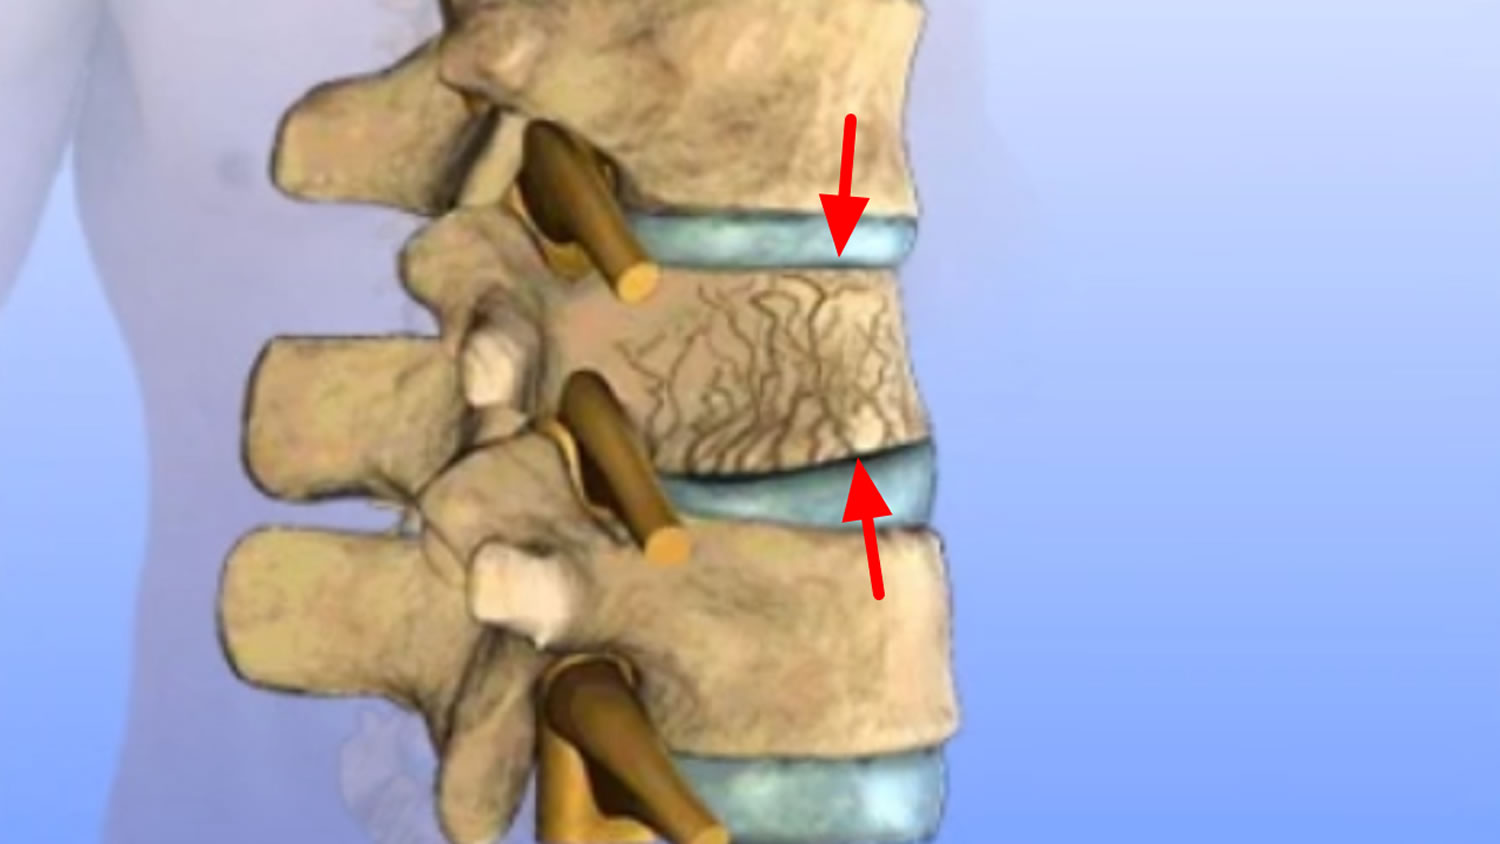 Compression fracture spine causes, symptoms, diagnosis & treatment